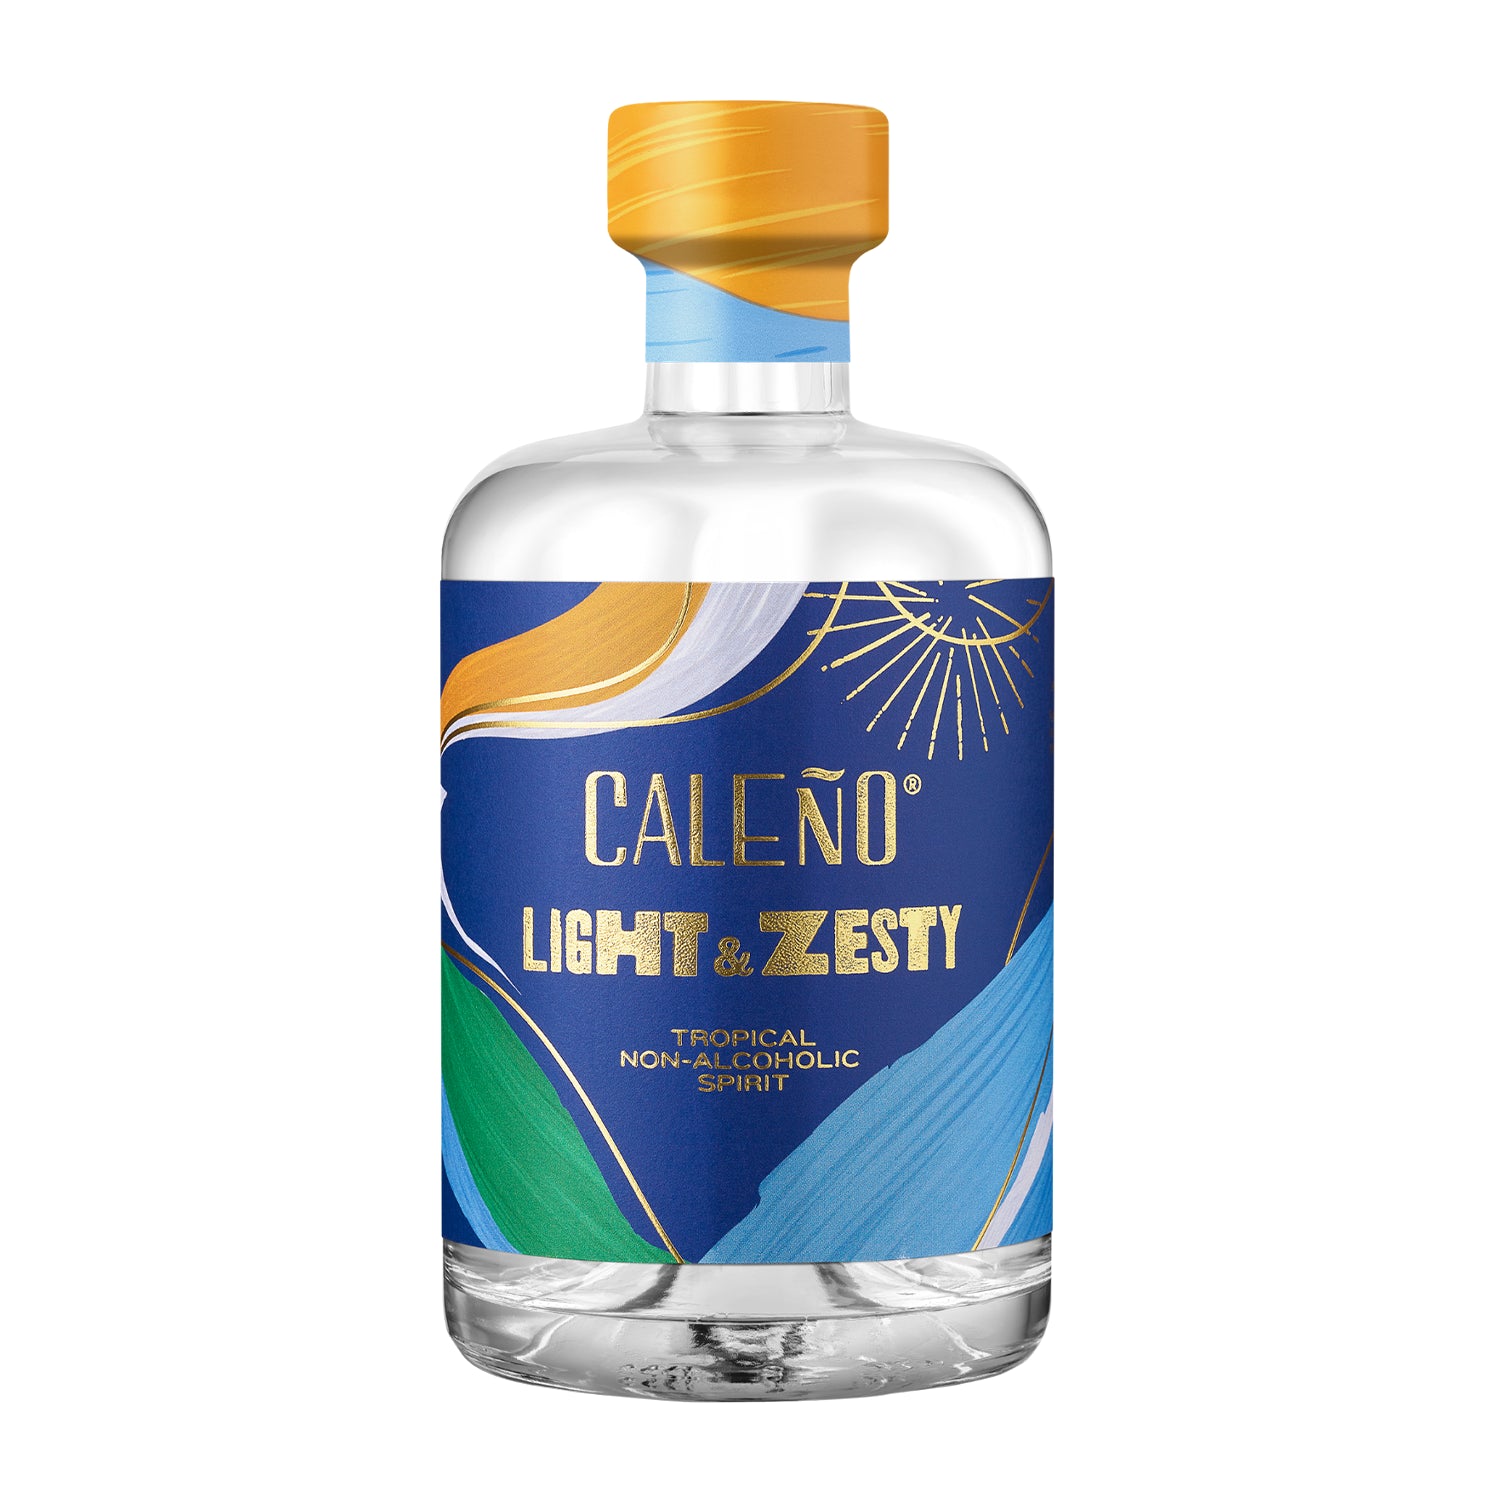 Non-alcoholic spirit Caleńo Light & Zesty